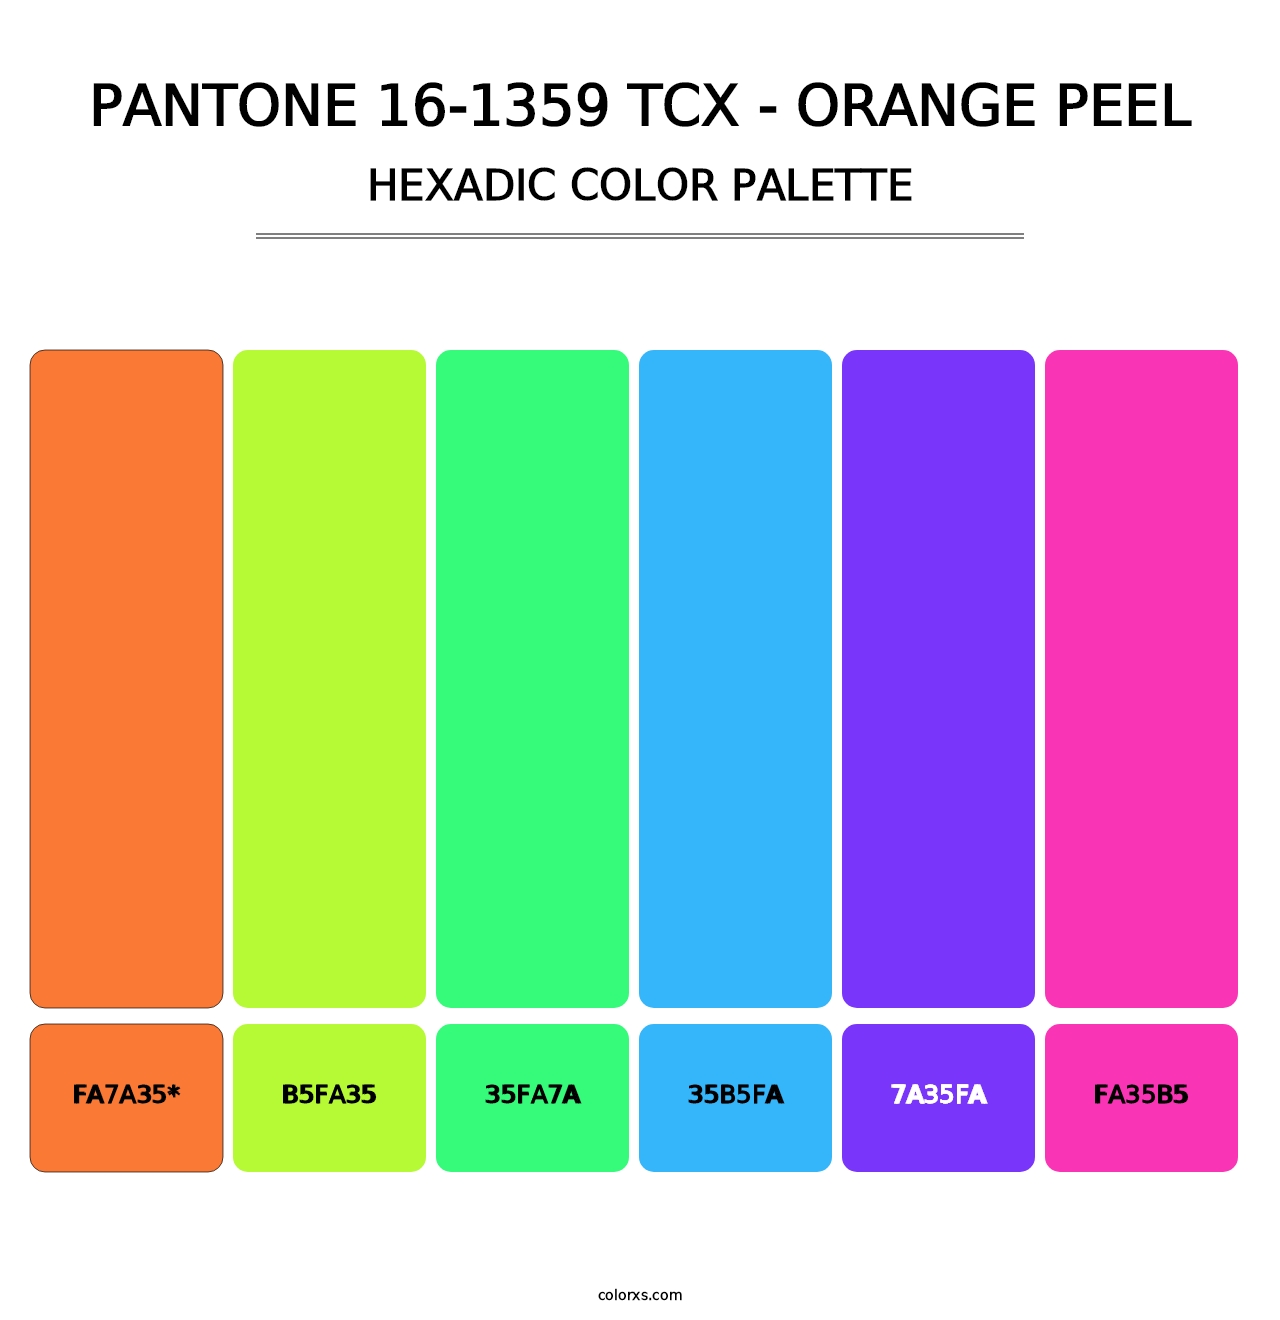 PANTONE 16-1359 TCX - Orange Peel - Hexadic Color Palette